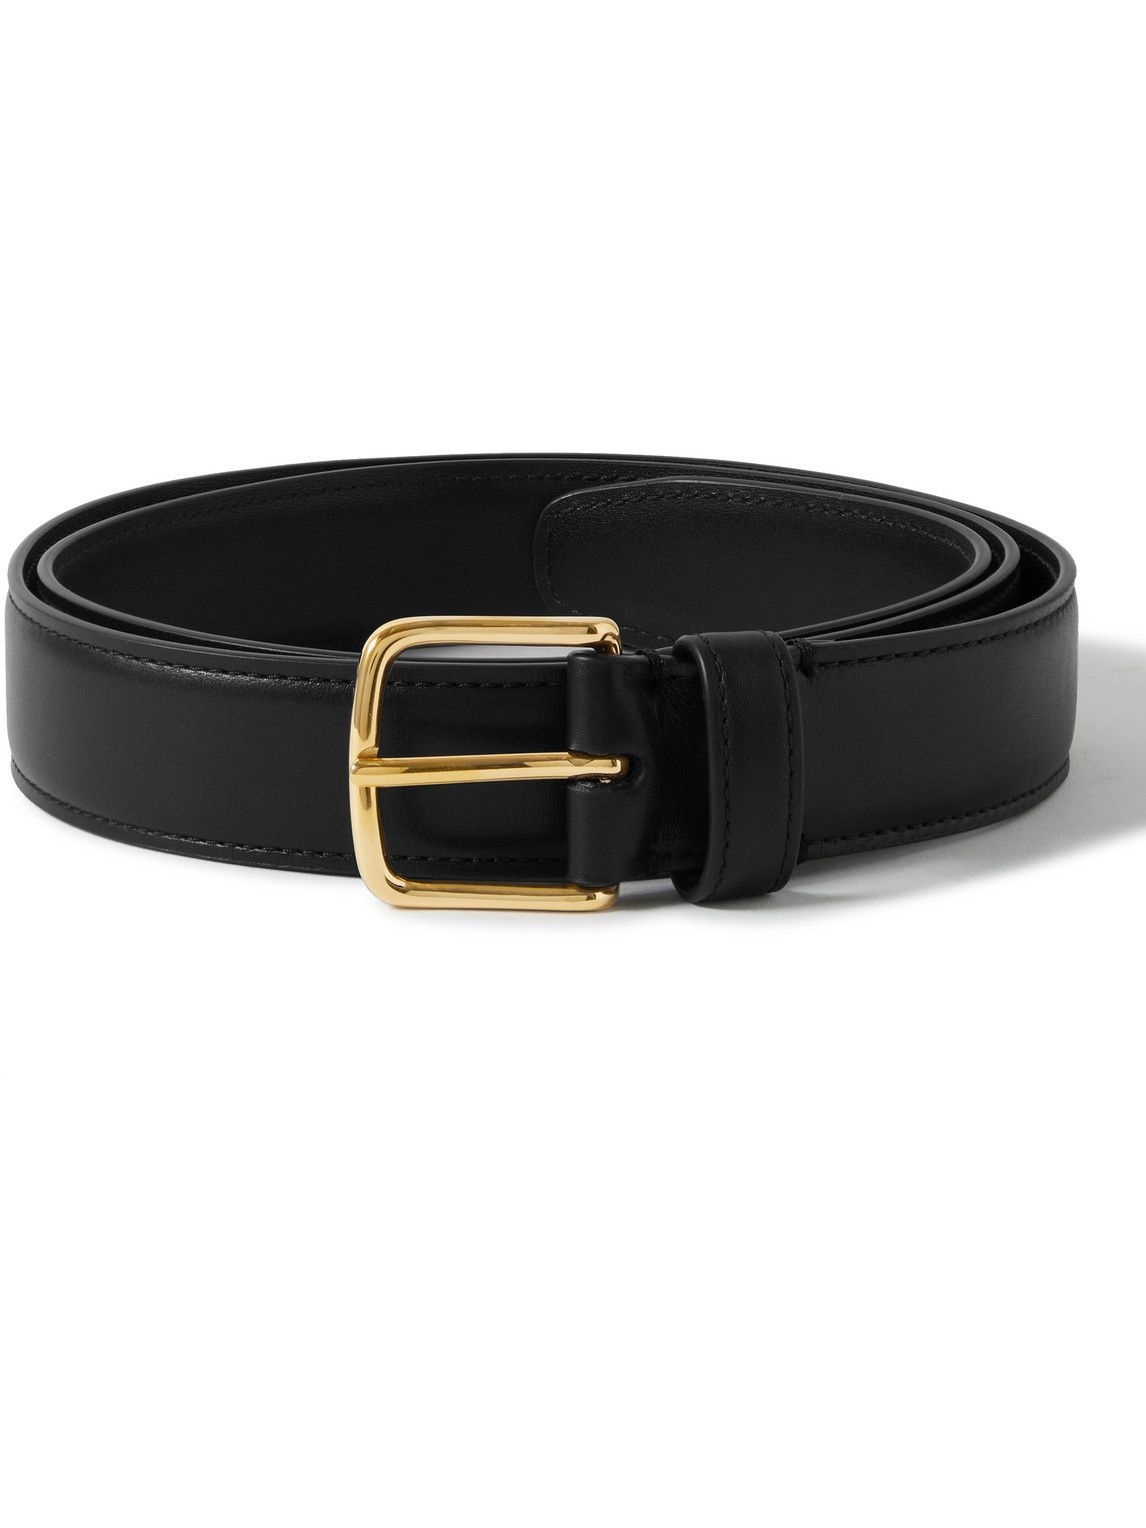 The Row - 3cm Leather Belt - Black The Row